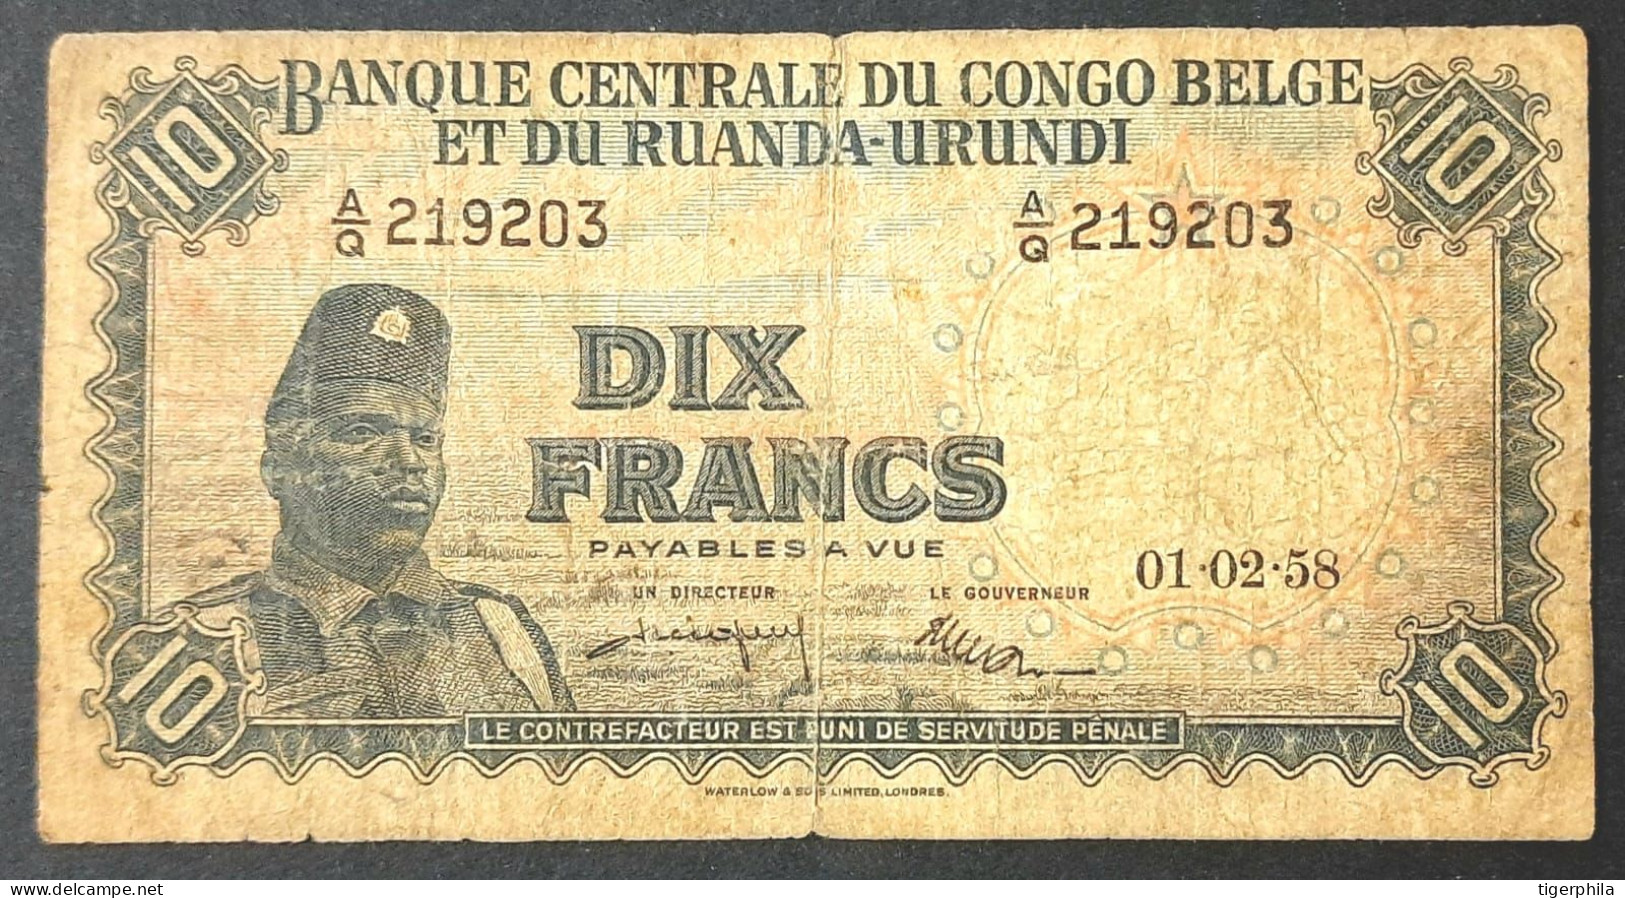 BELGIAN CONGO & RUANDA URUNDI 1958 10 Francs Used Note - Banco De Congo Belga